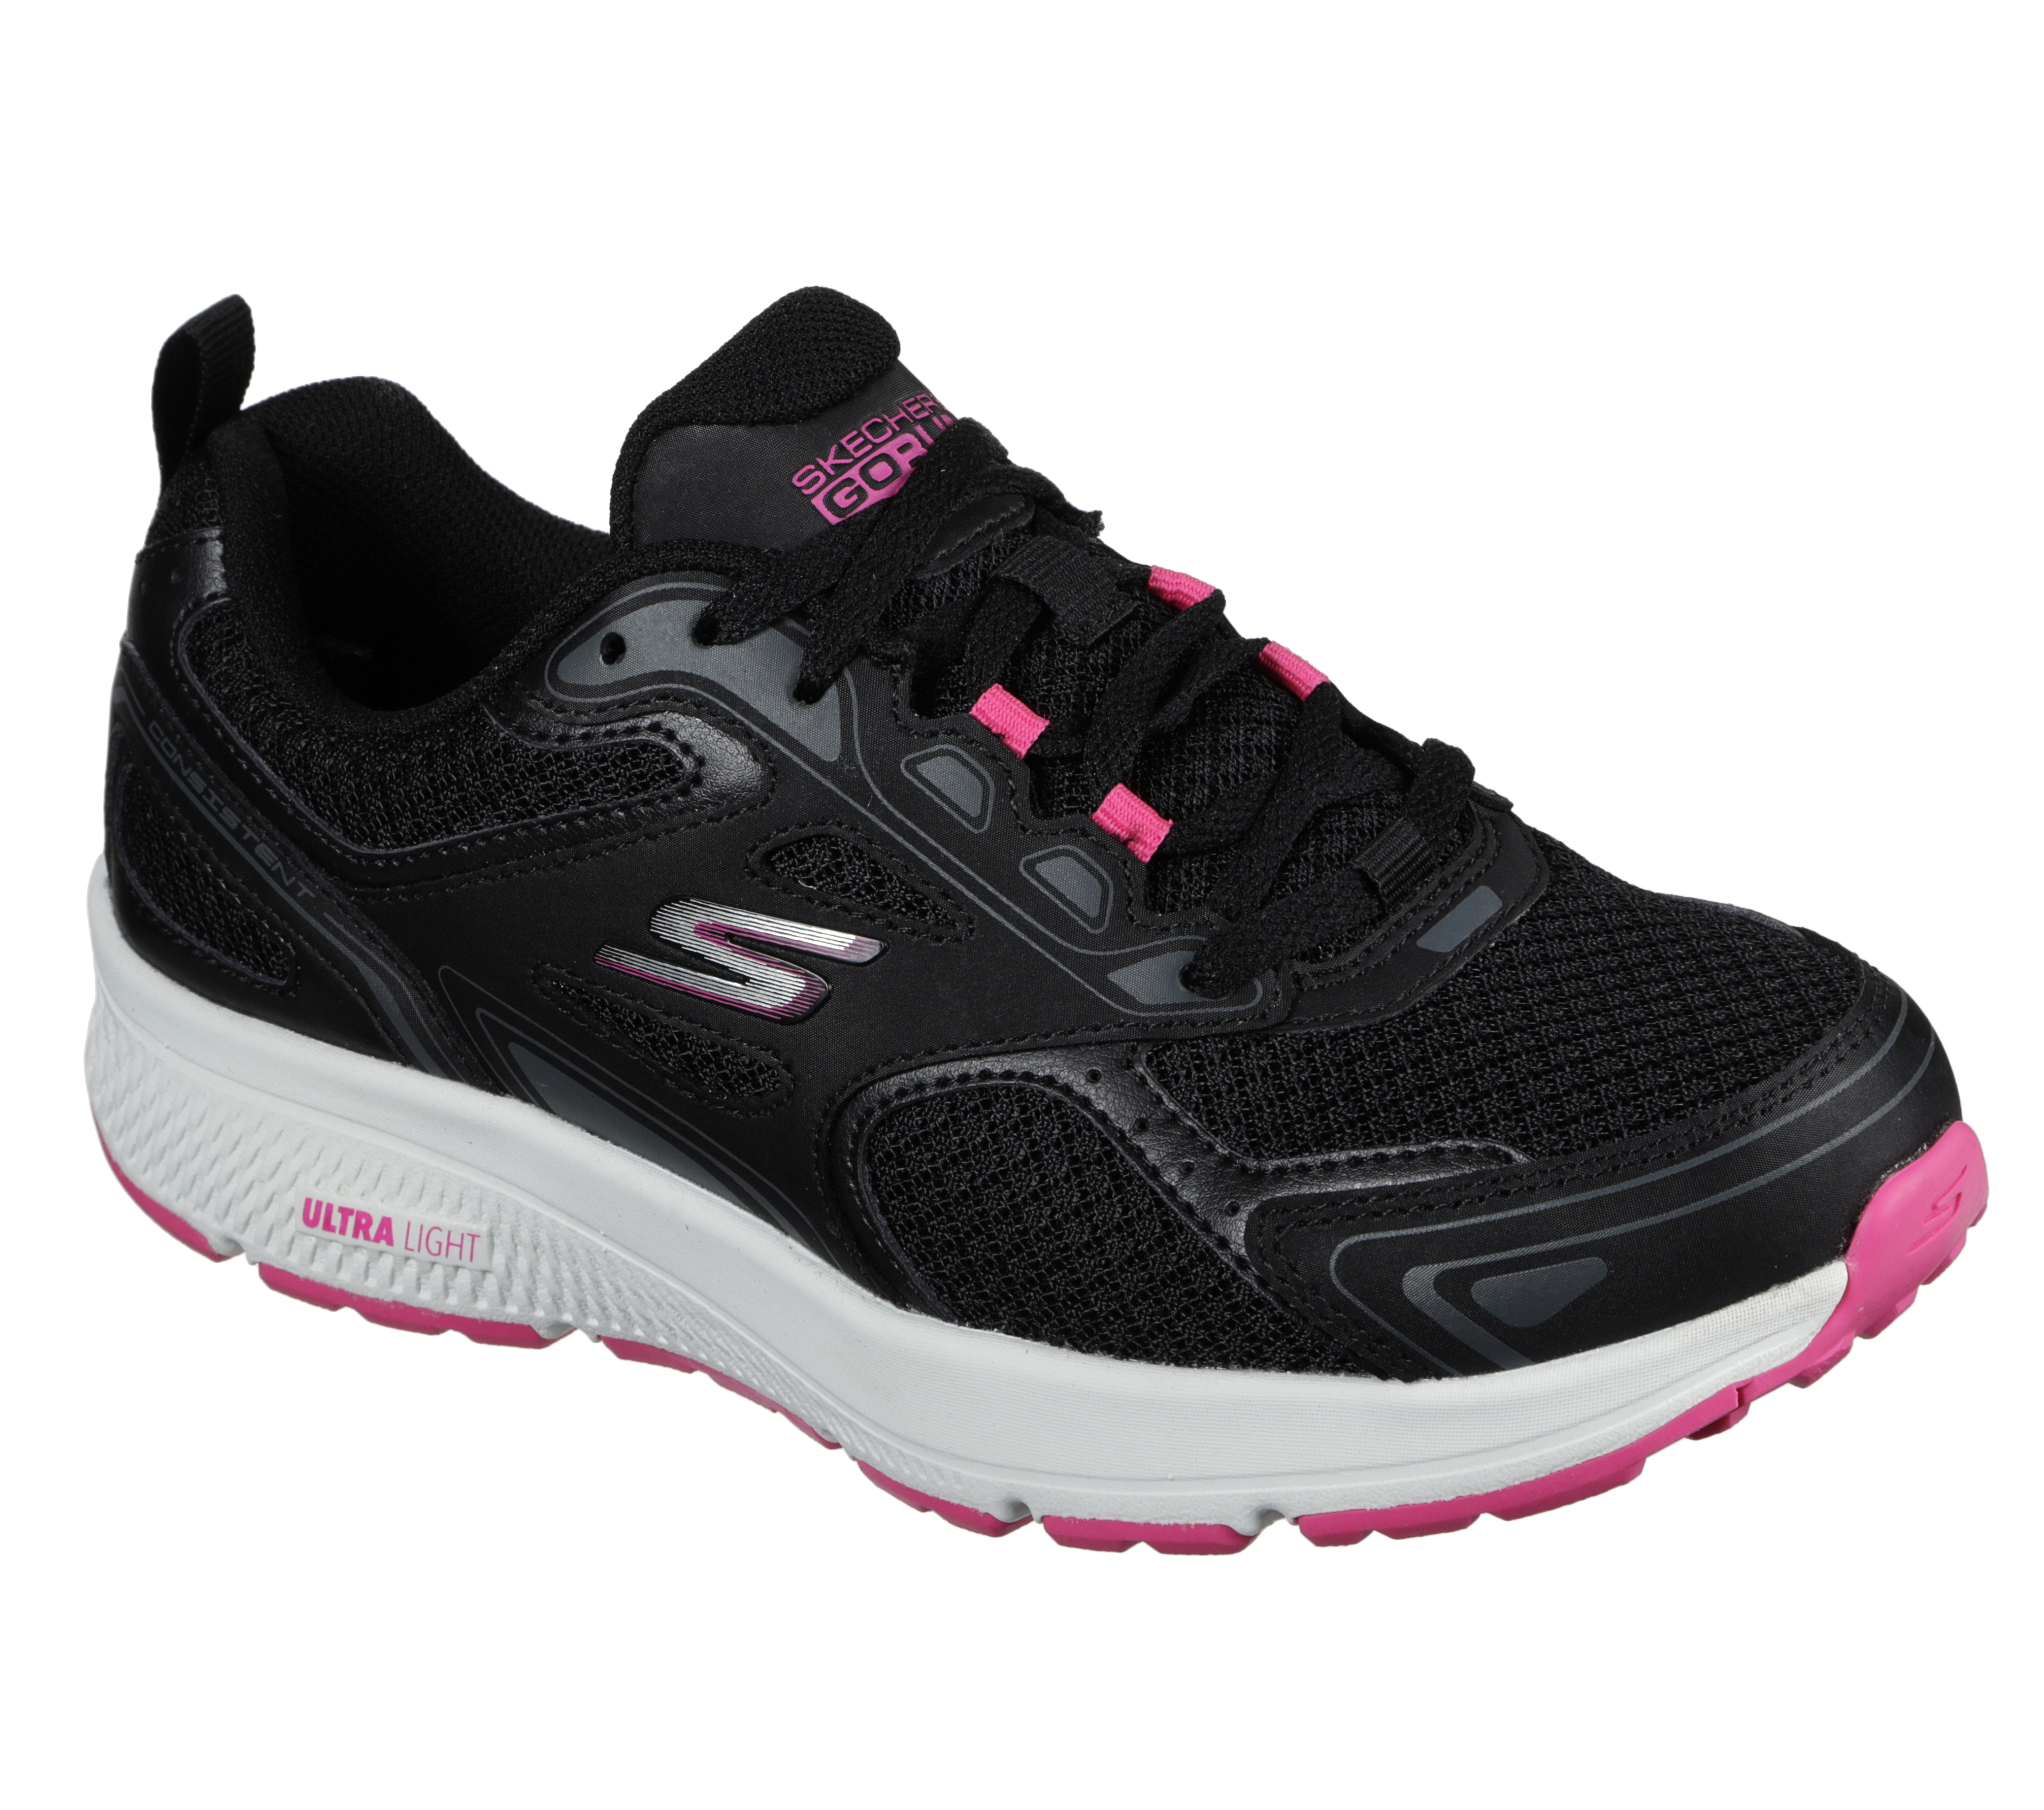 Skechers Women's GOrun Consistent Running Shoes, Black/Pink, 8.5